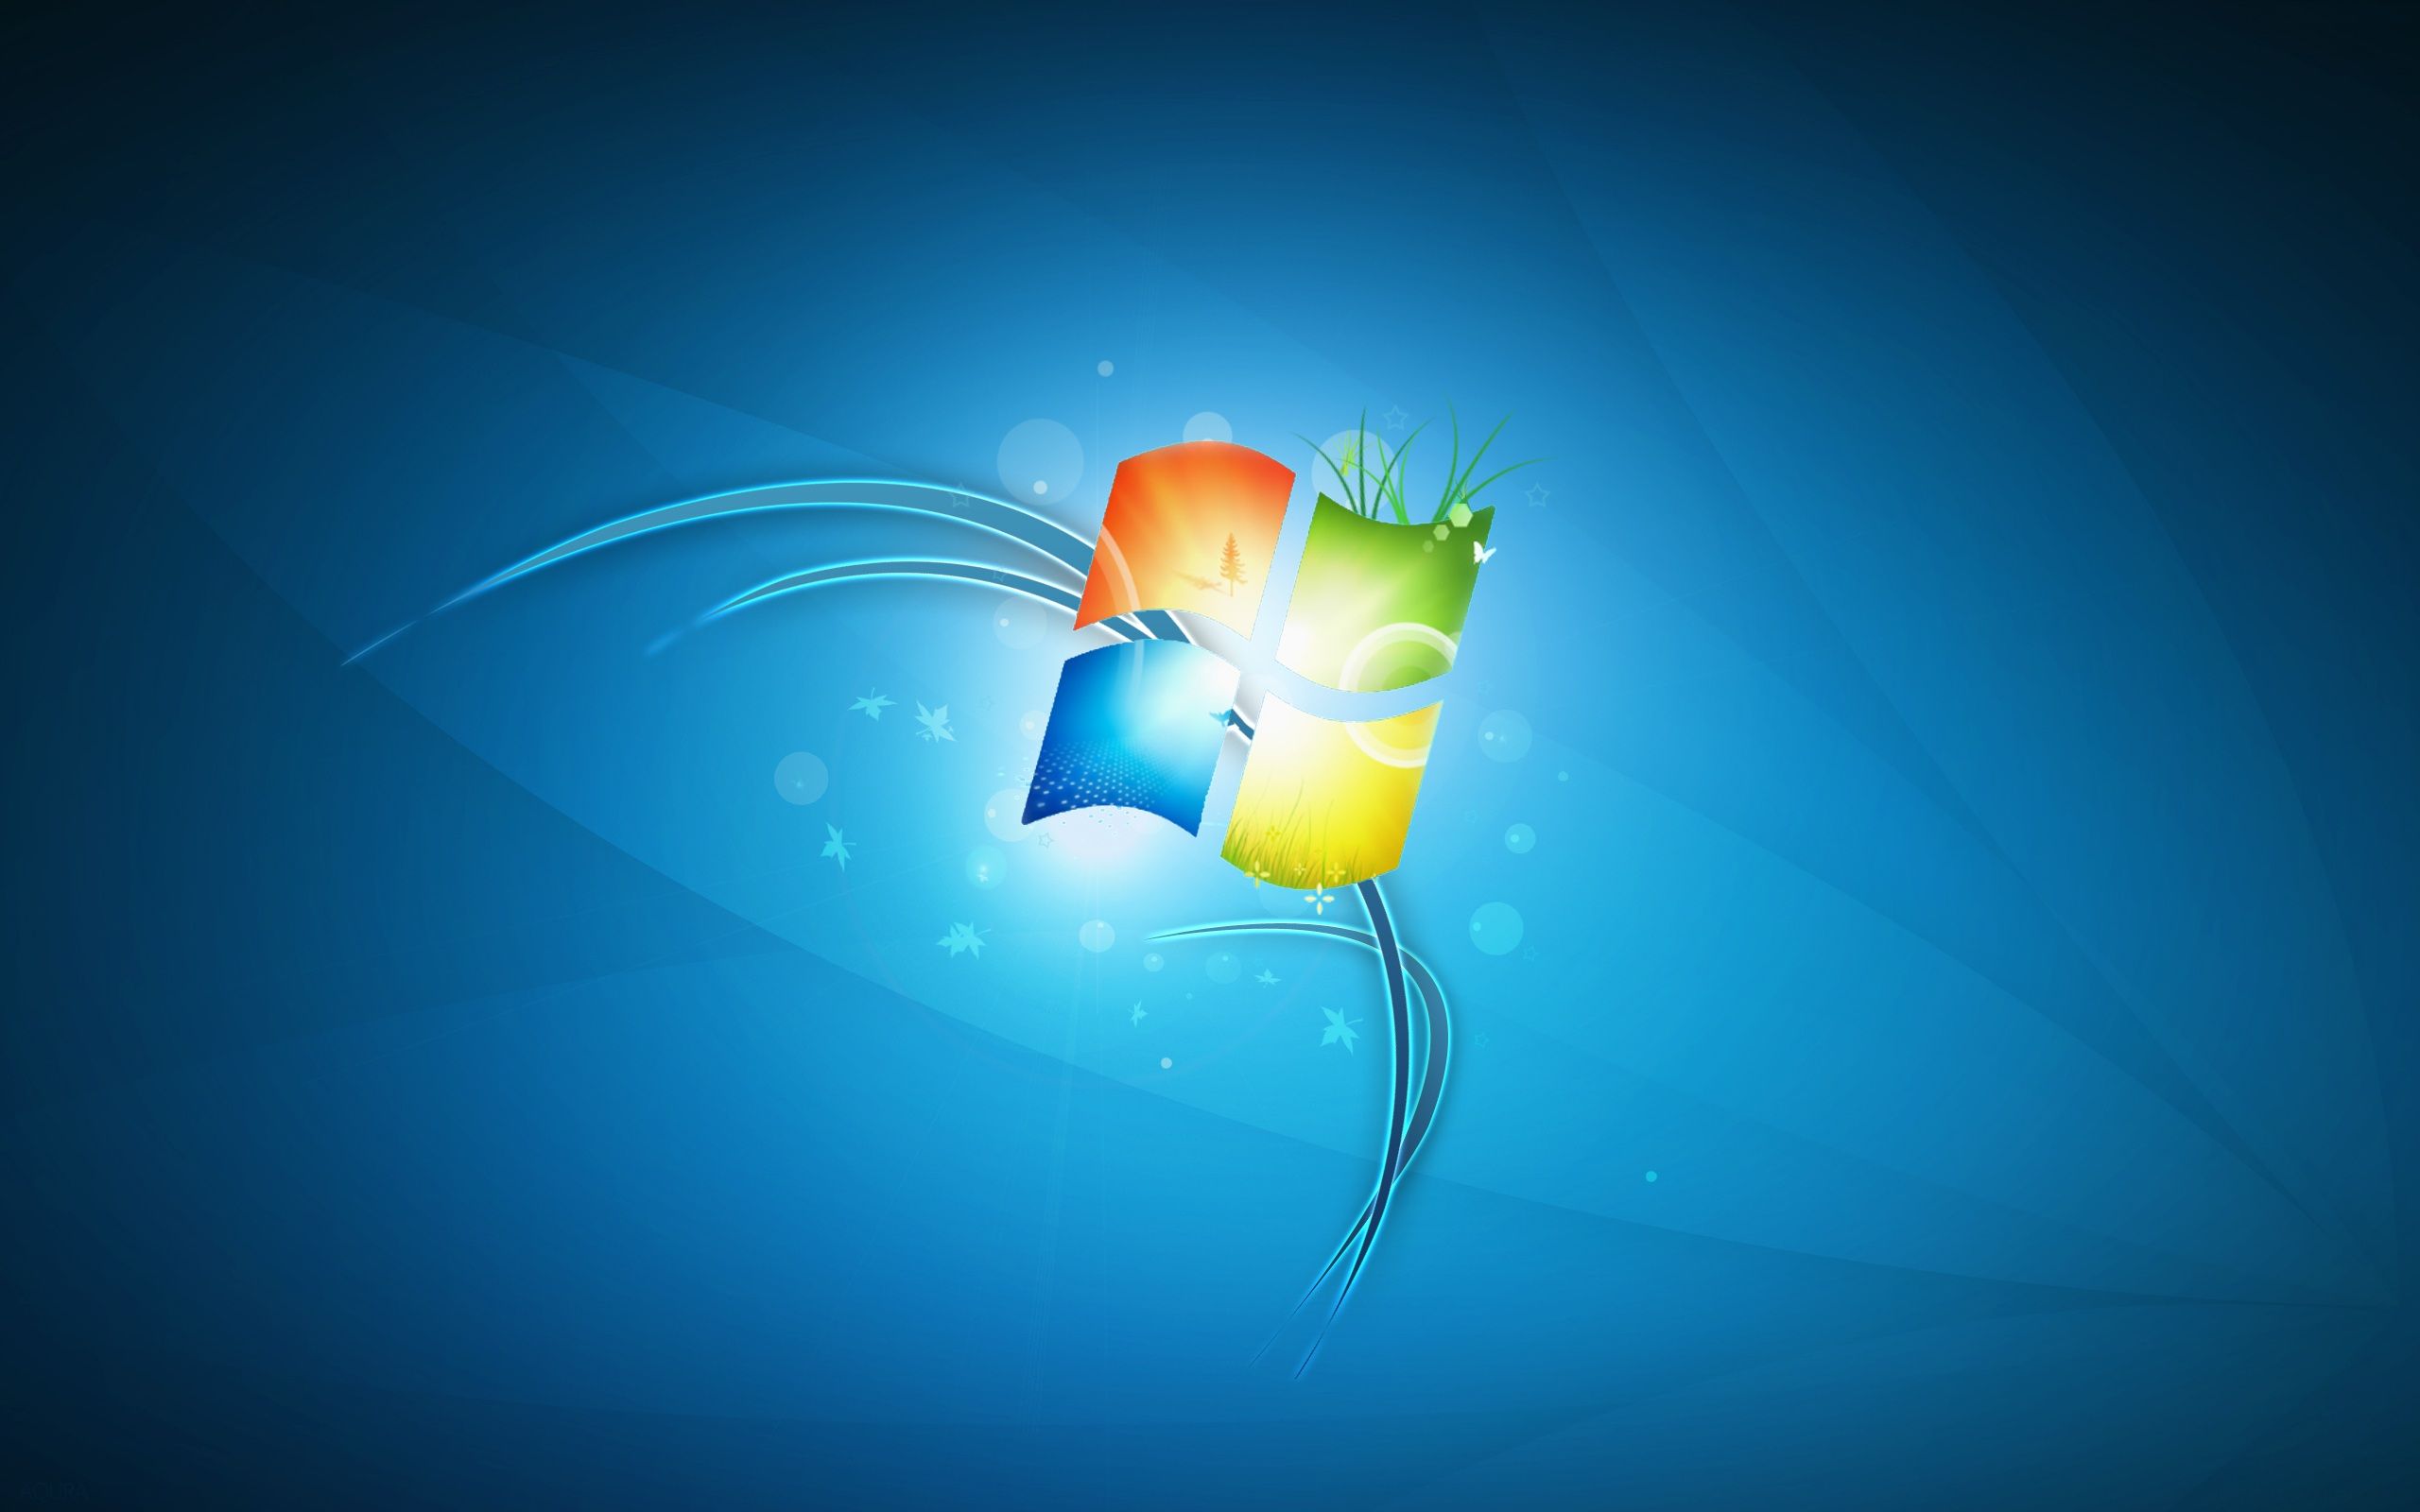 Latest Windows 7 Free HD Wallpapers Download Free Desktop